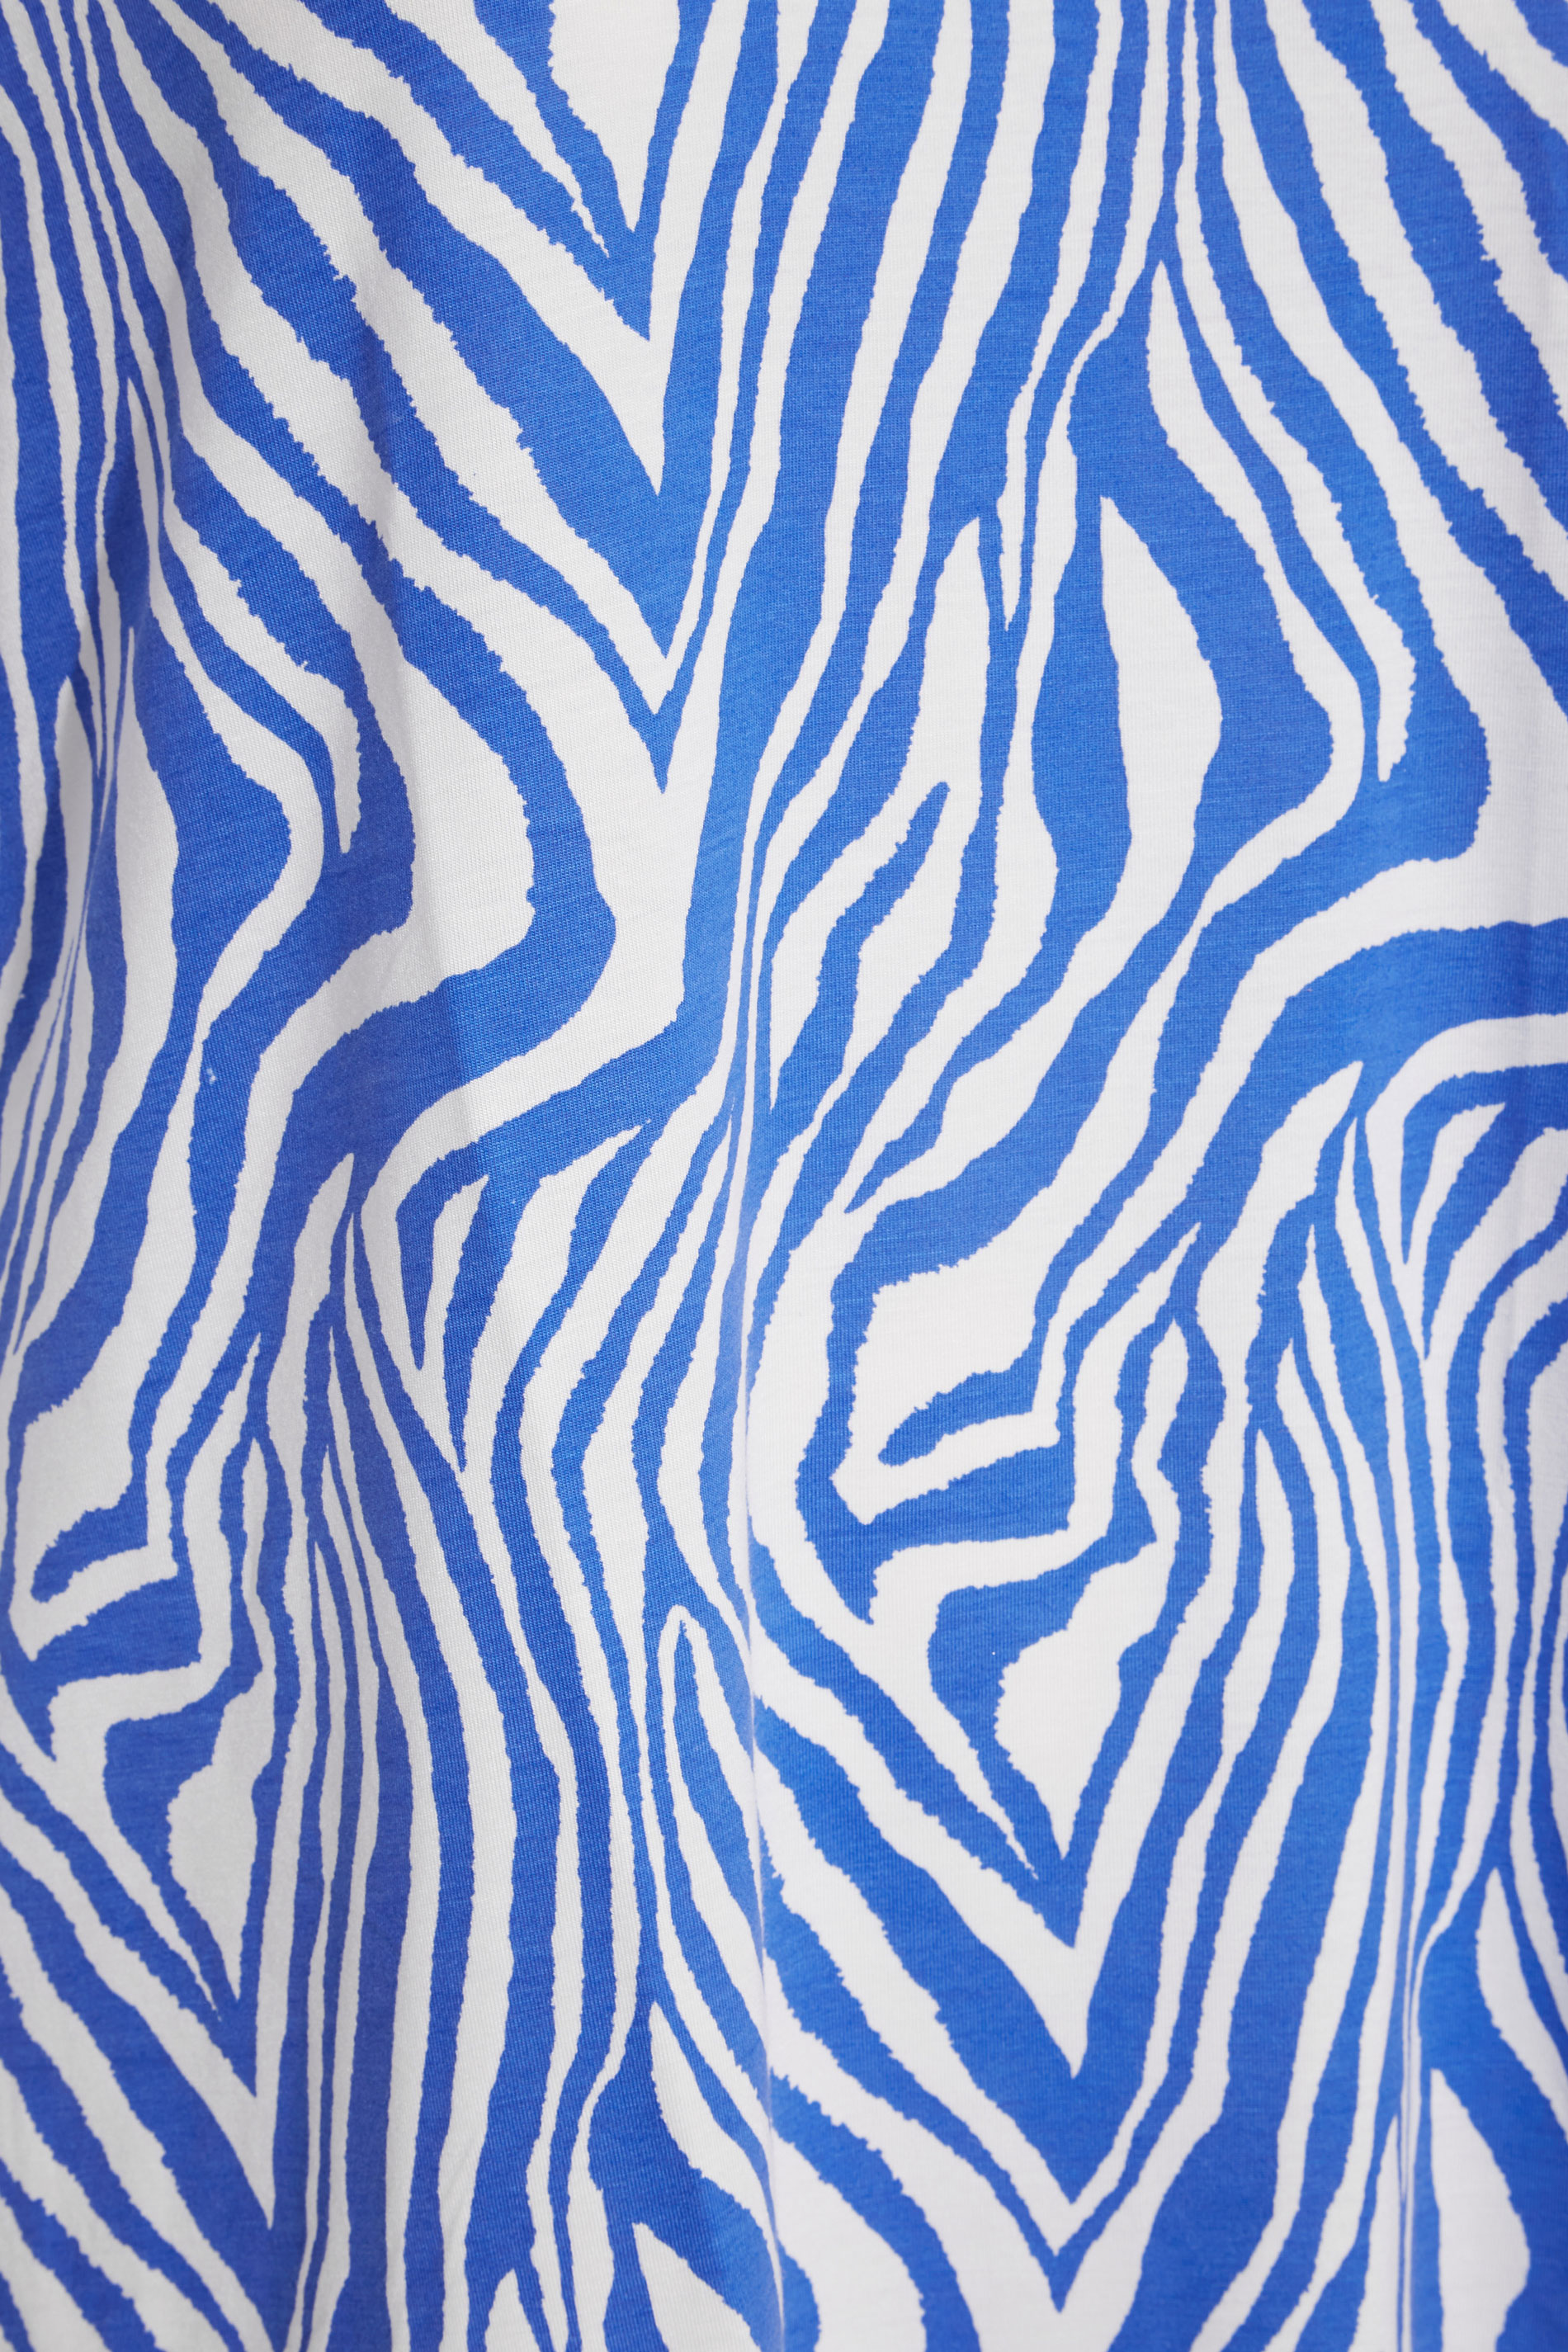 Grande taille  Tops Grande taille  Tops Casual | T-Shirt Bleu Manches Longues Oversize Zébré - SX03831